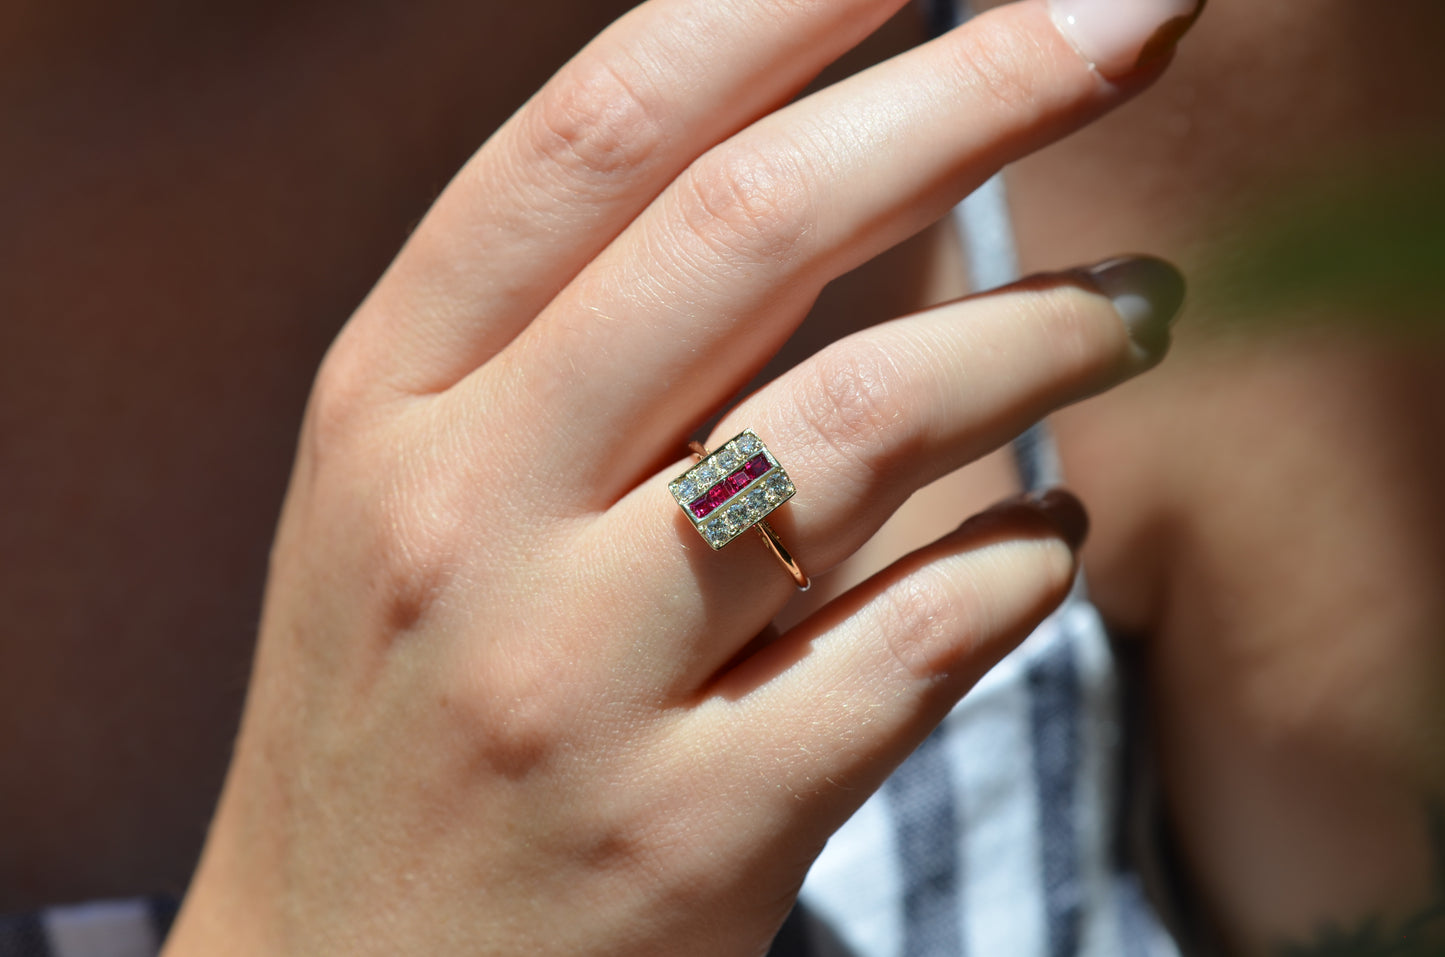 Sleek Late Edwardian Ruby and Diamond Panel Ring